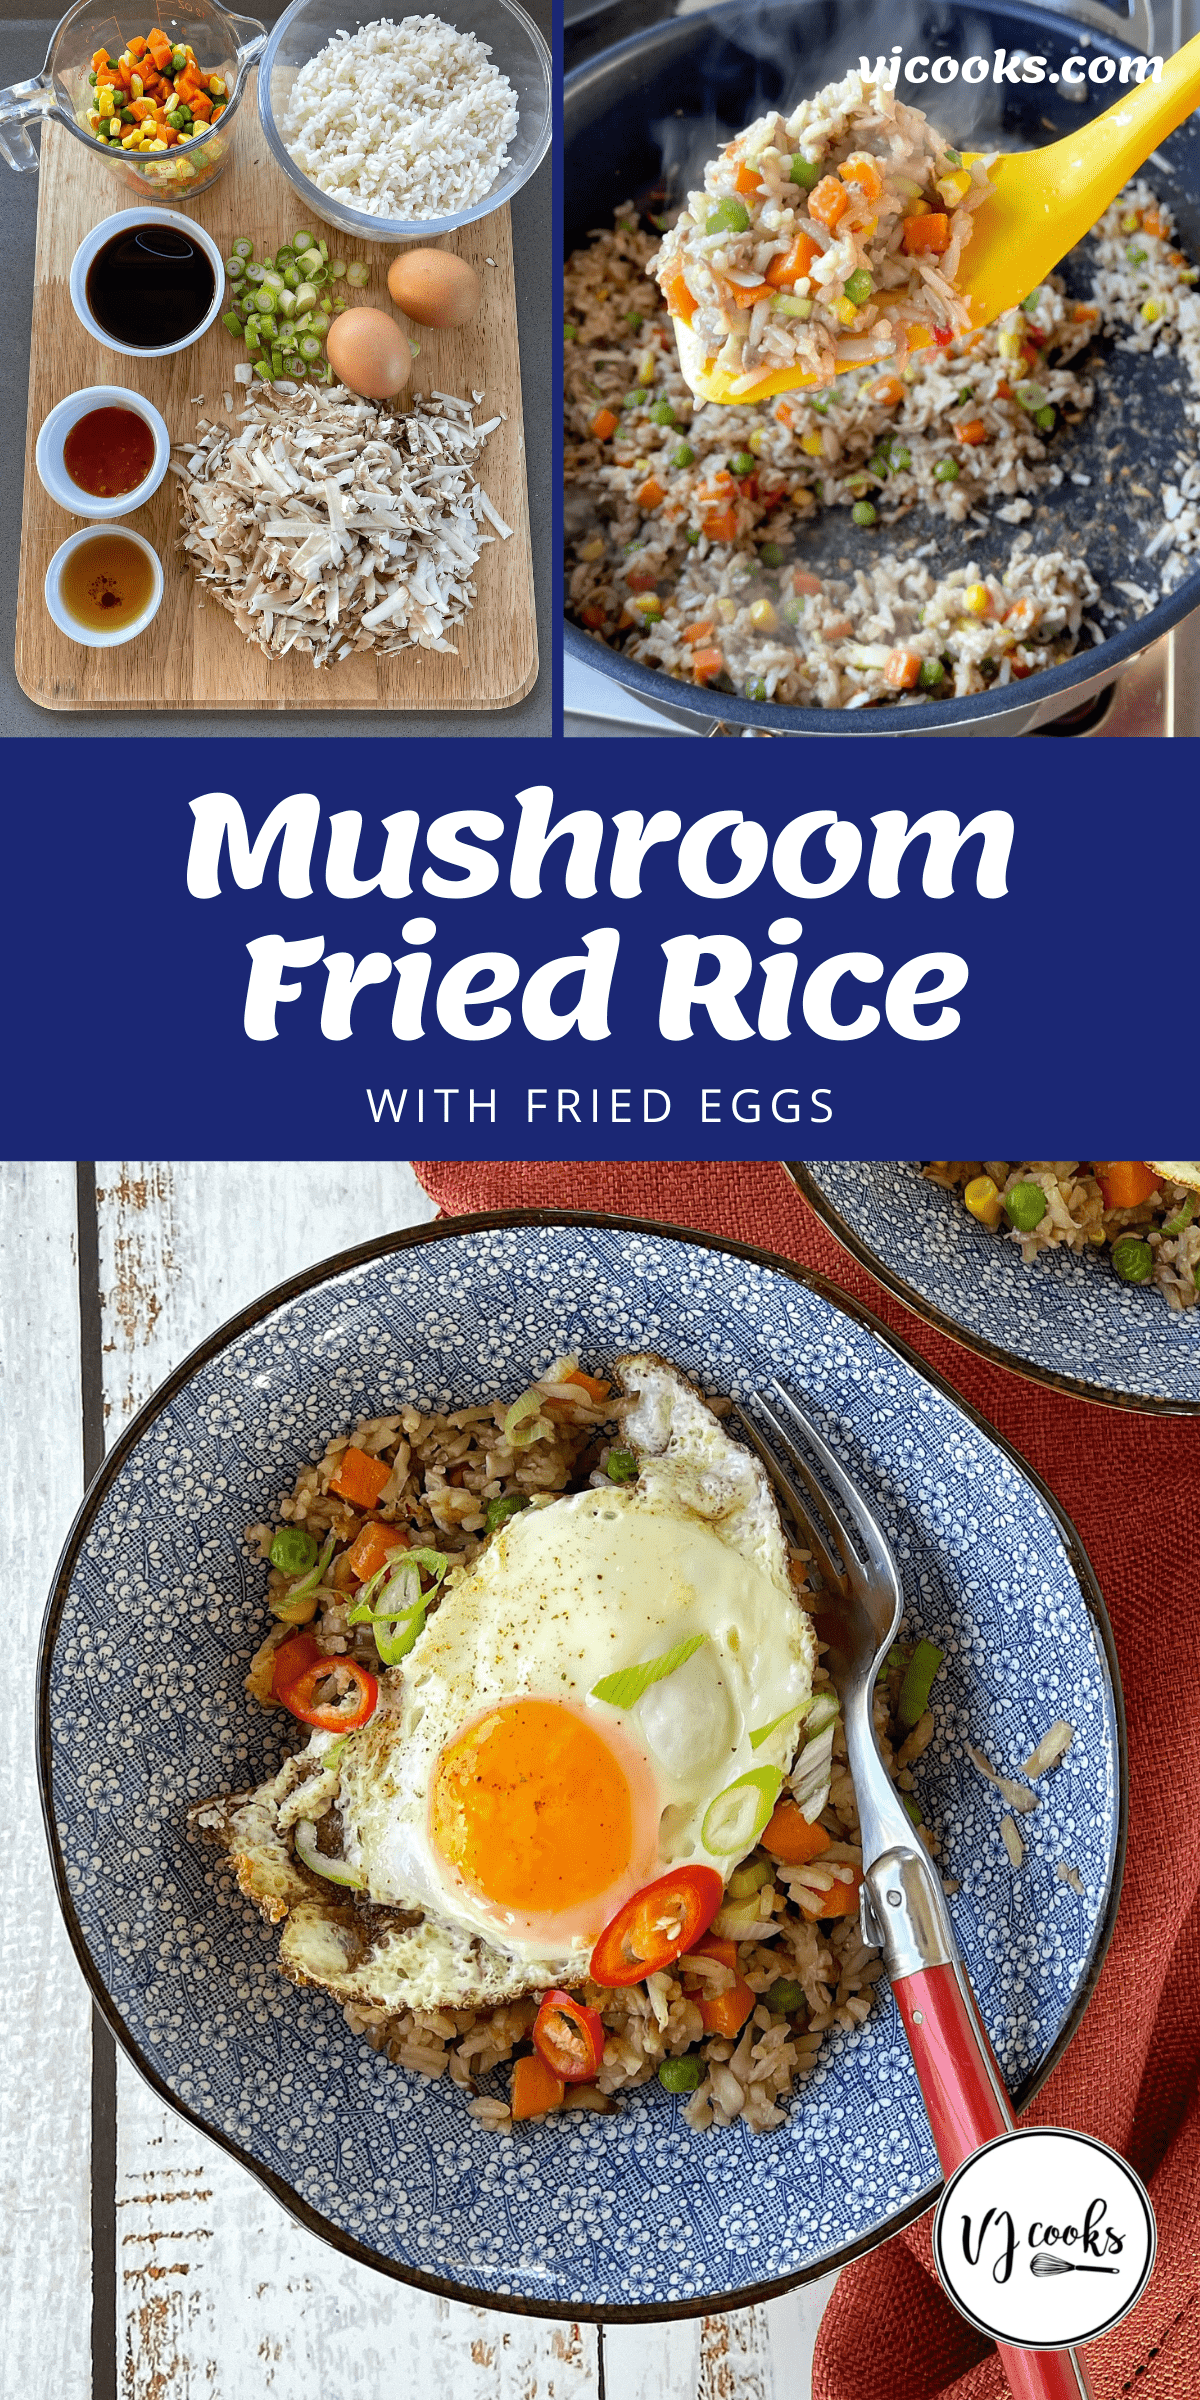 The process of making Mushroom Fried Rice